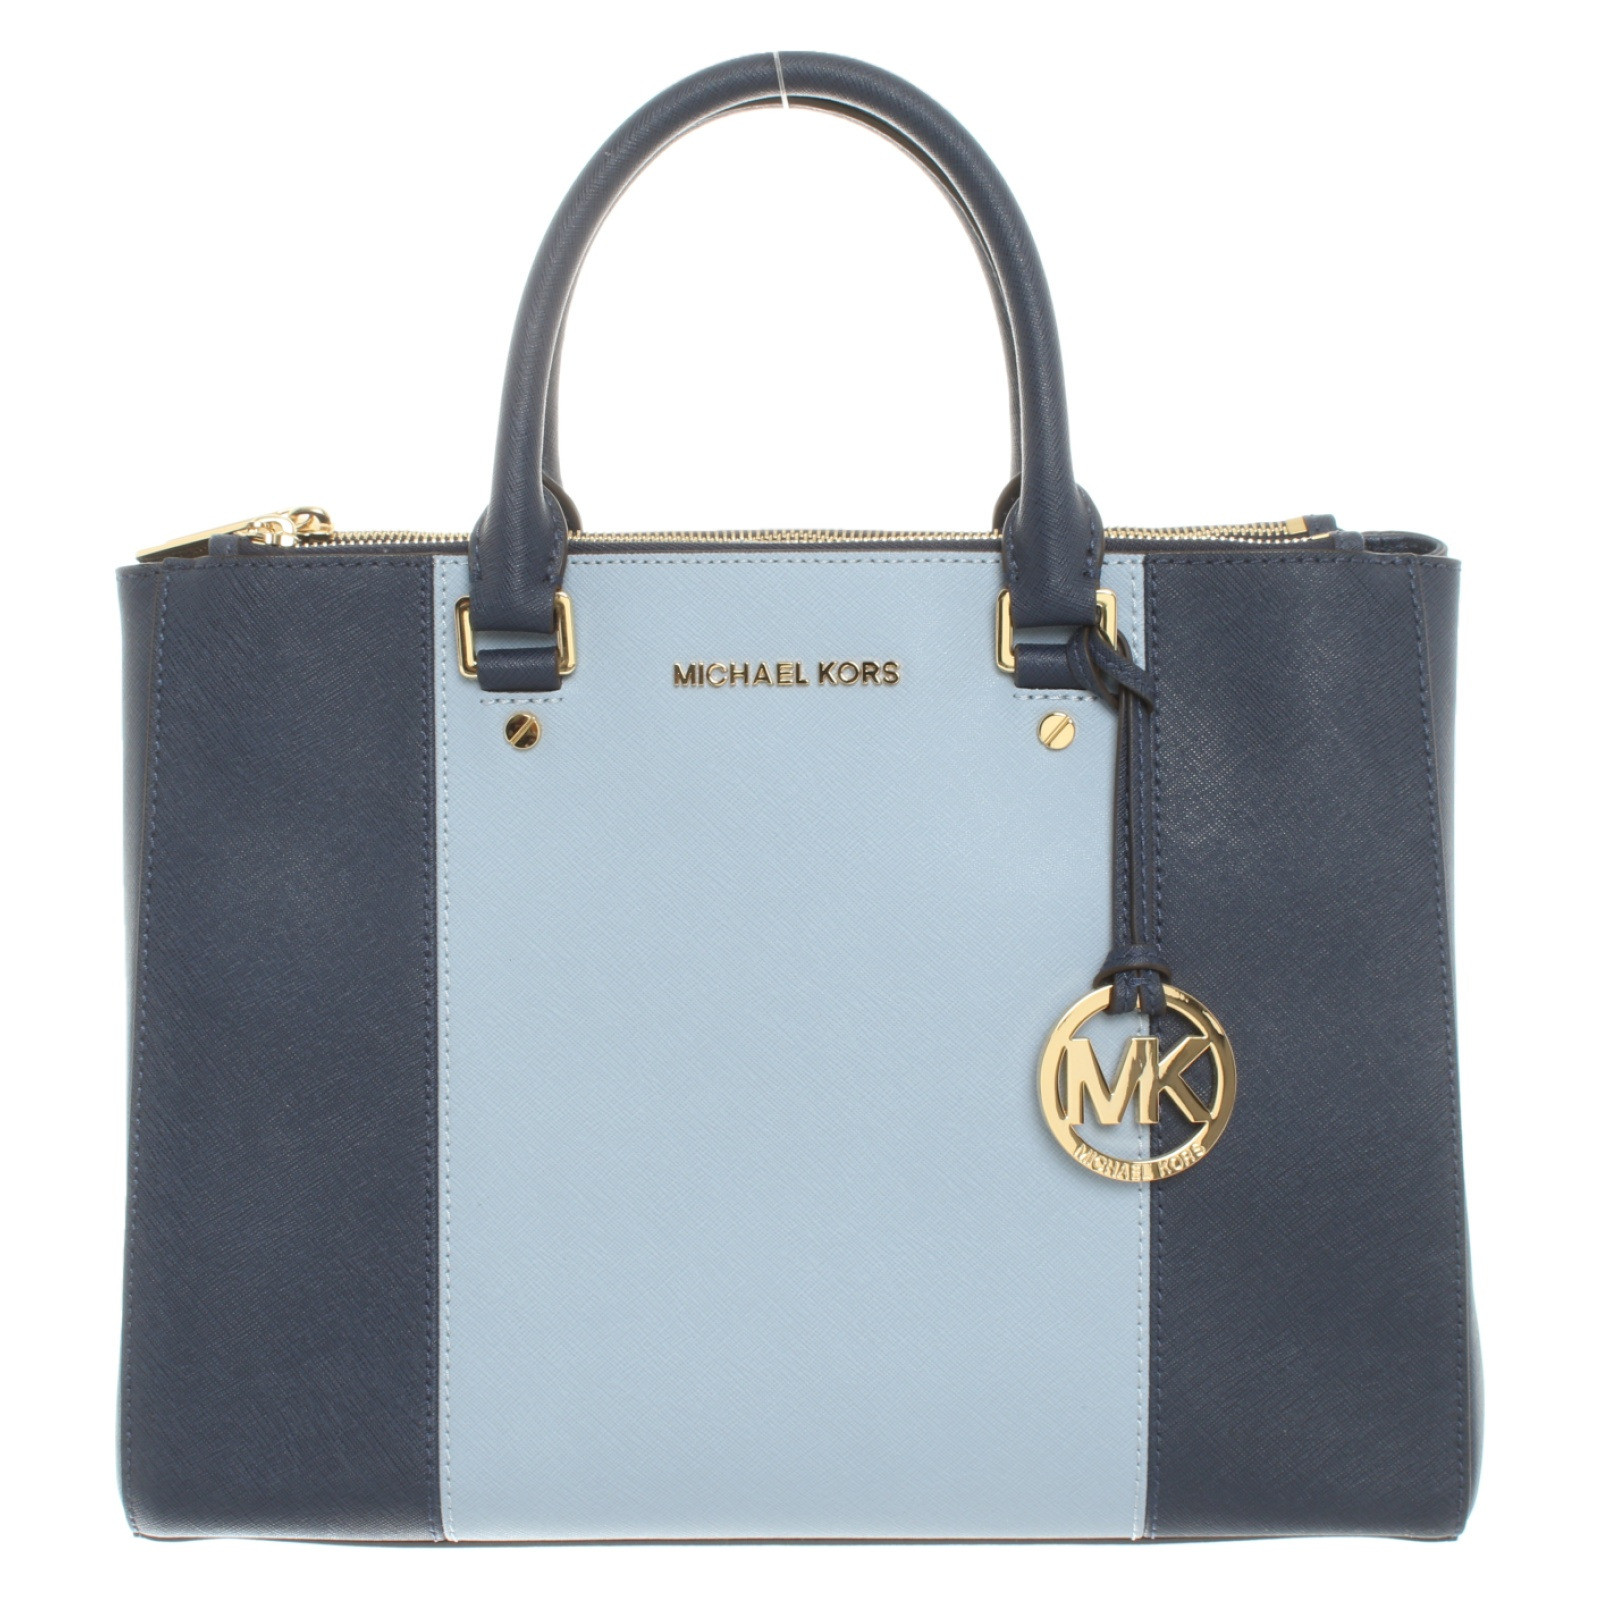 MICHAEL KORS Damen Handtasche aus Leder in Blau